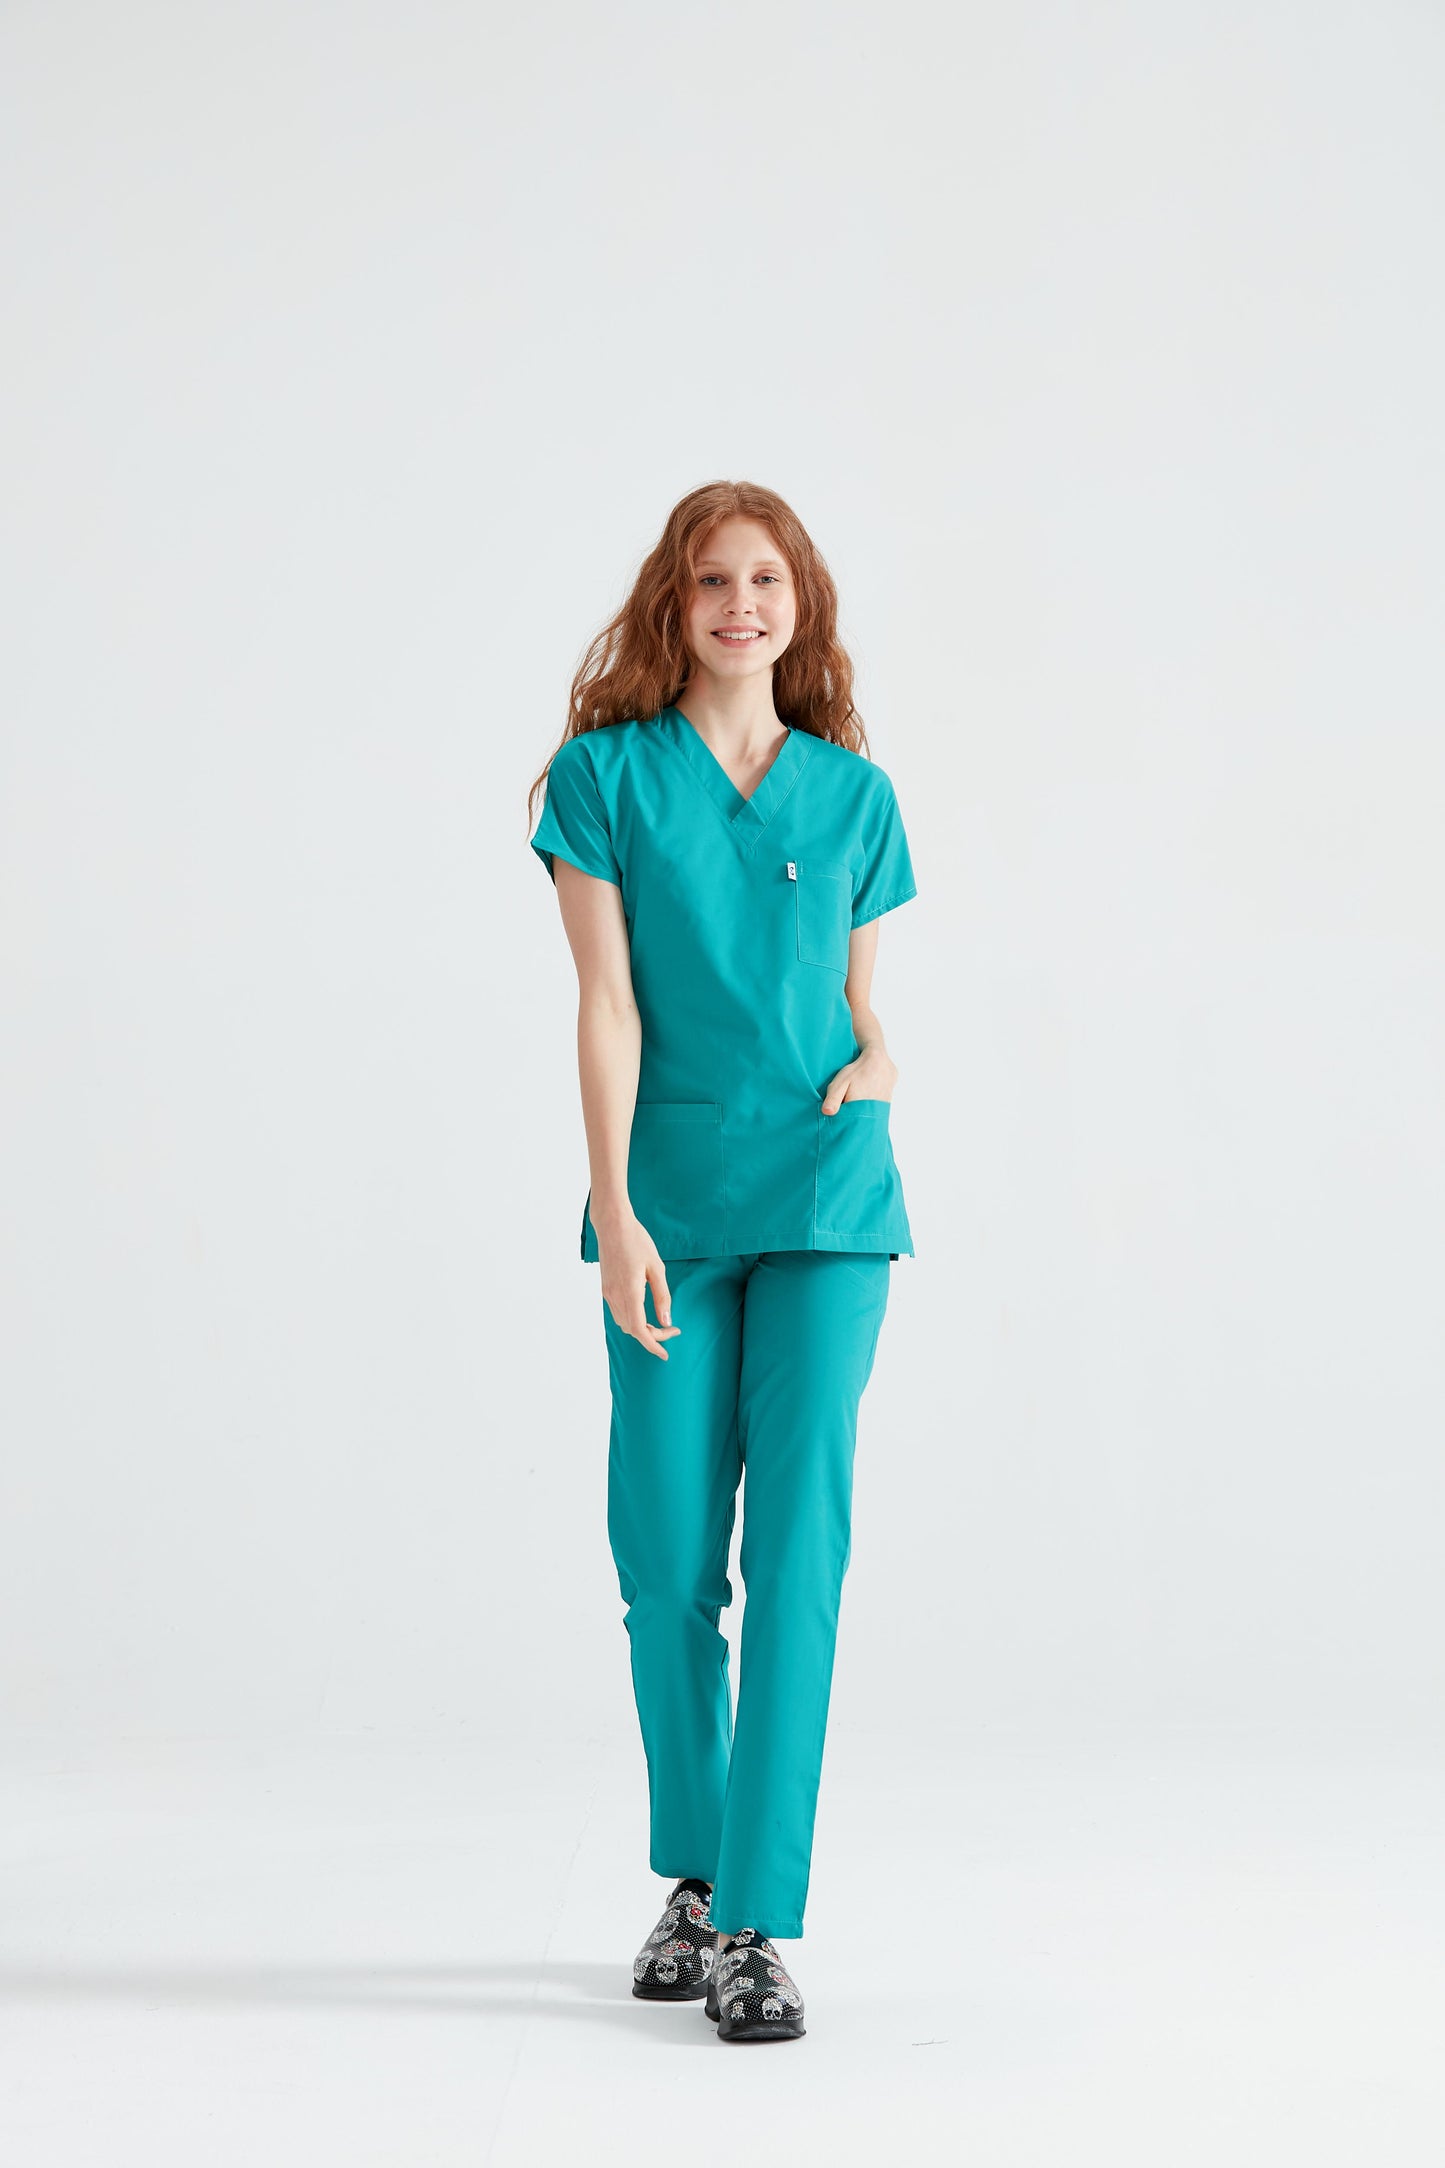 dama asistenta in costum medical de culoare verde chirurgical